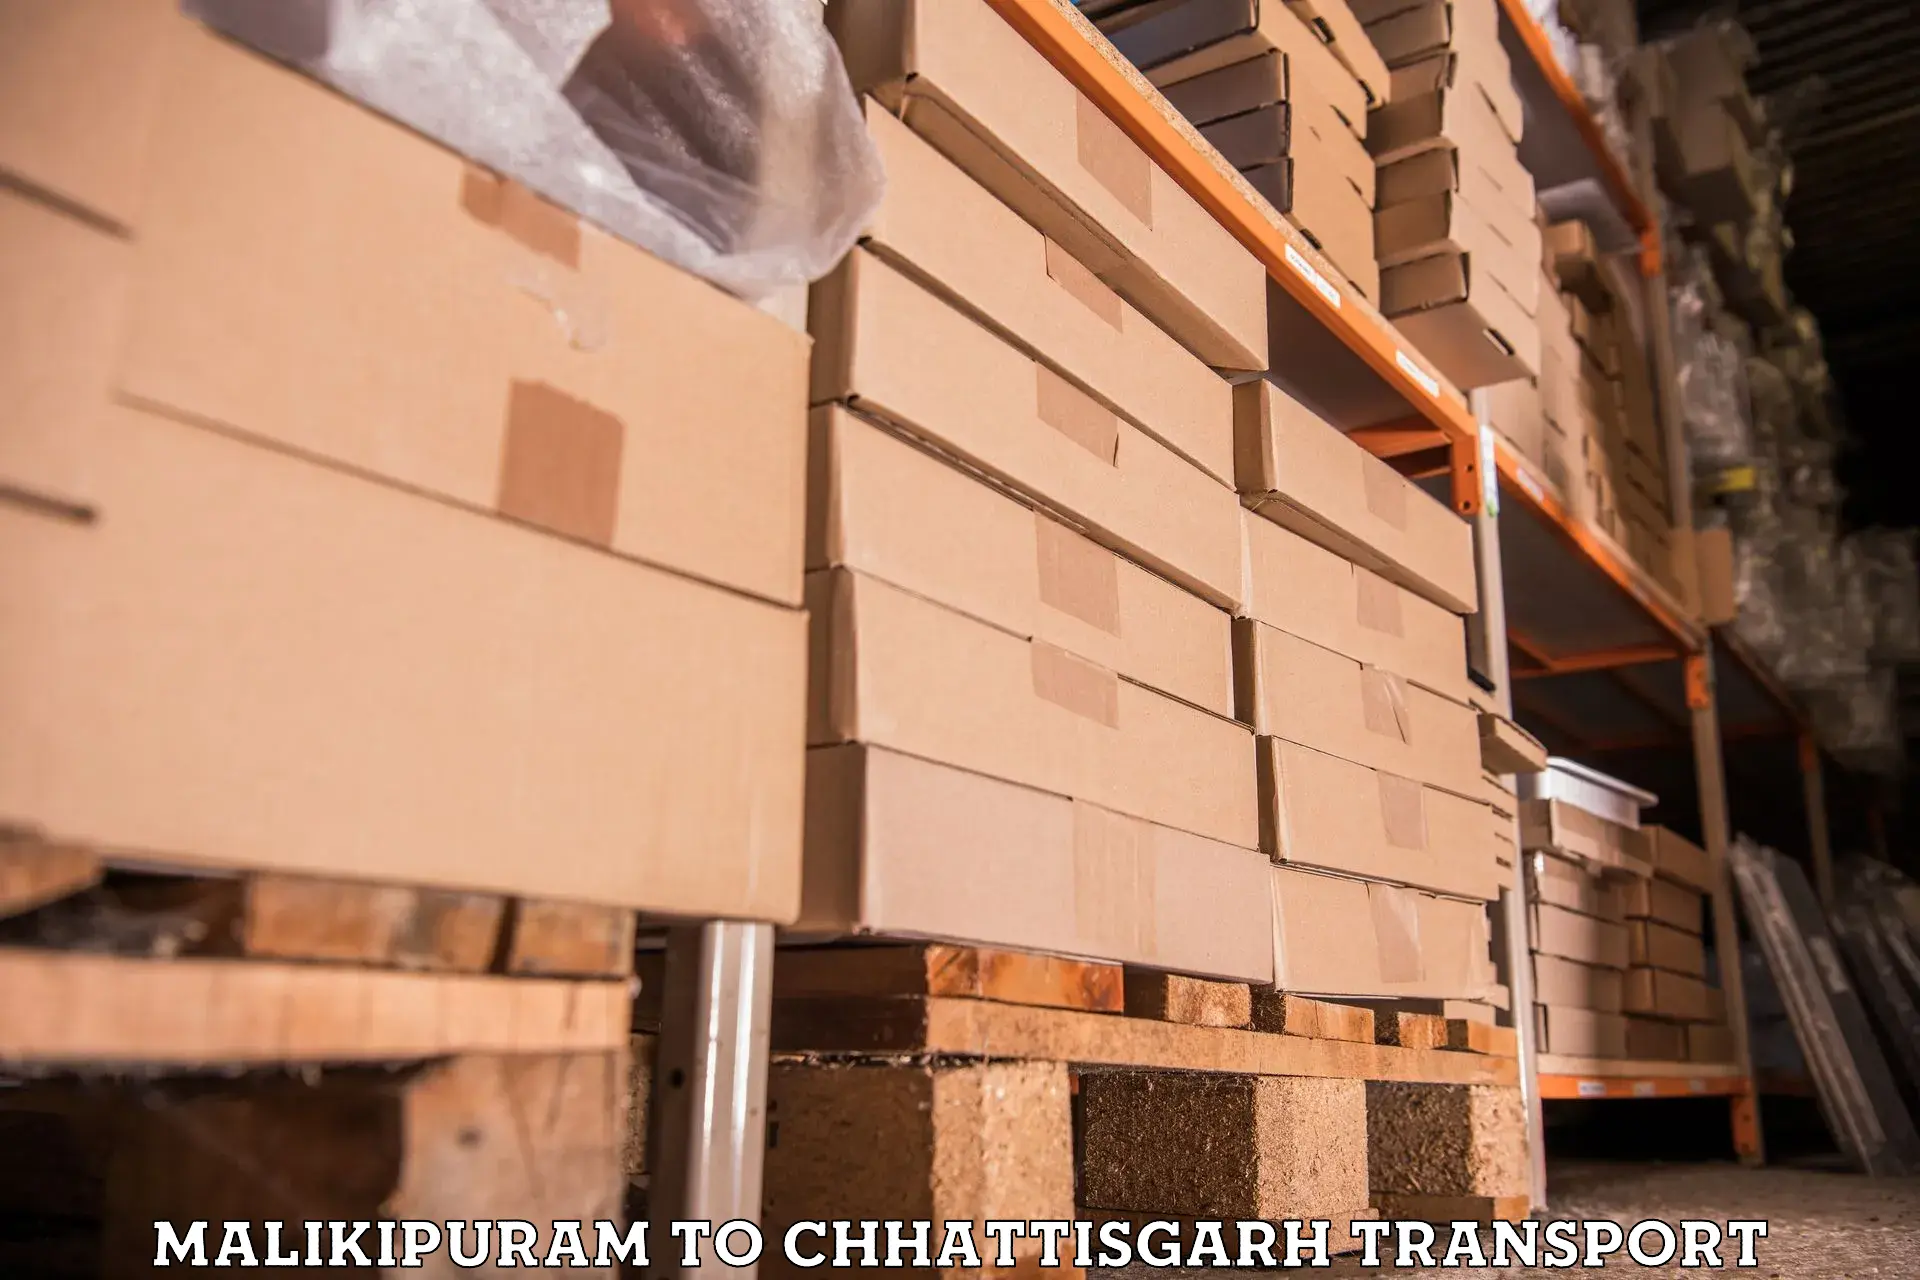 Lorry transport service Malikipuram to Korea Chhattisgarh